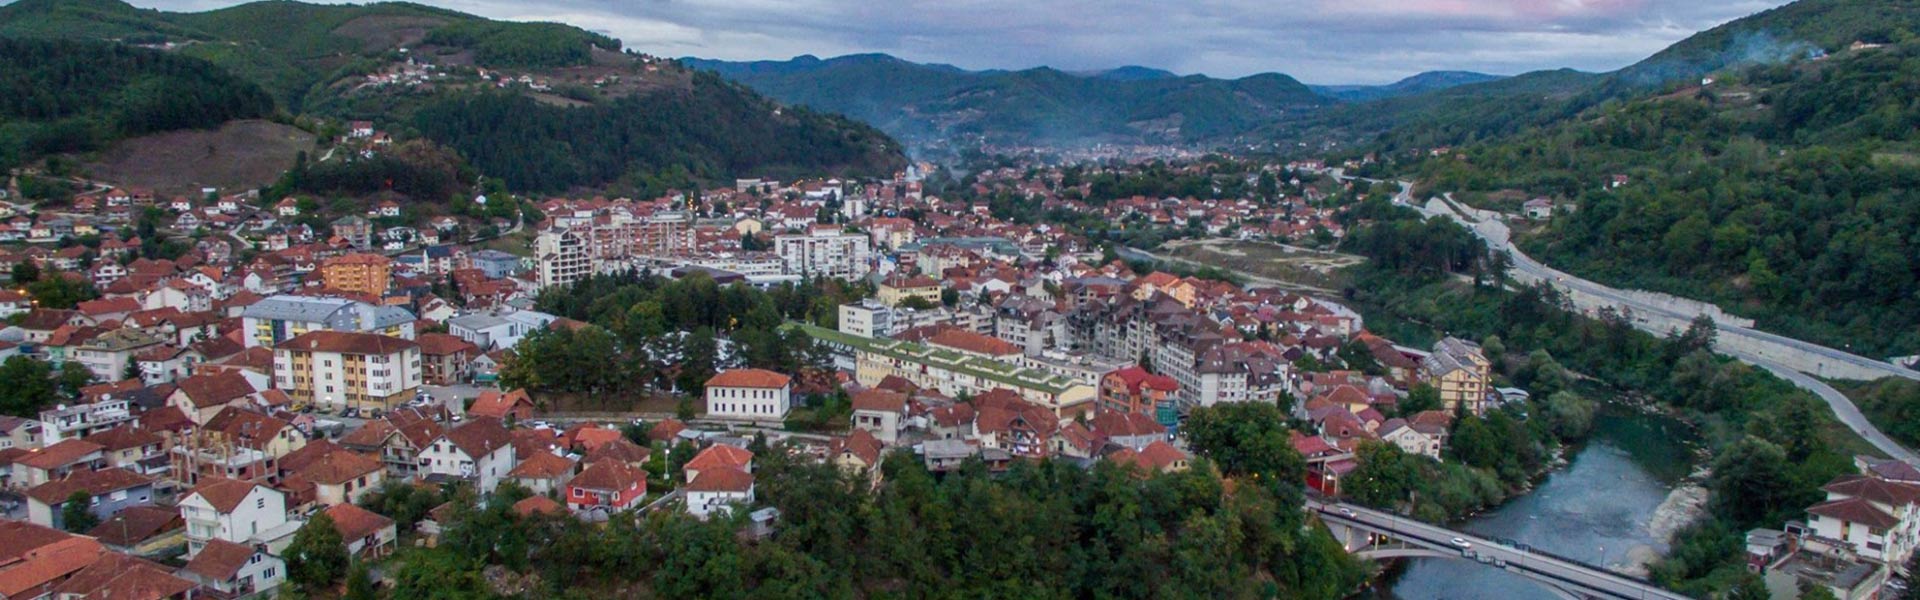 Rent a car Bijelo polje | Montenegro, Crna Gora